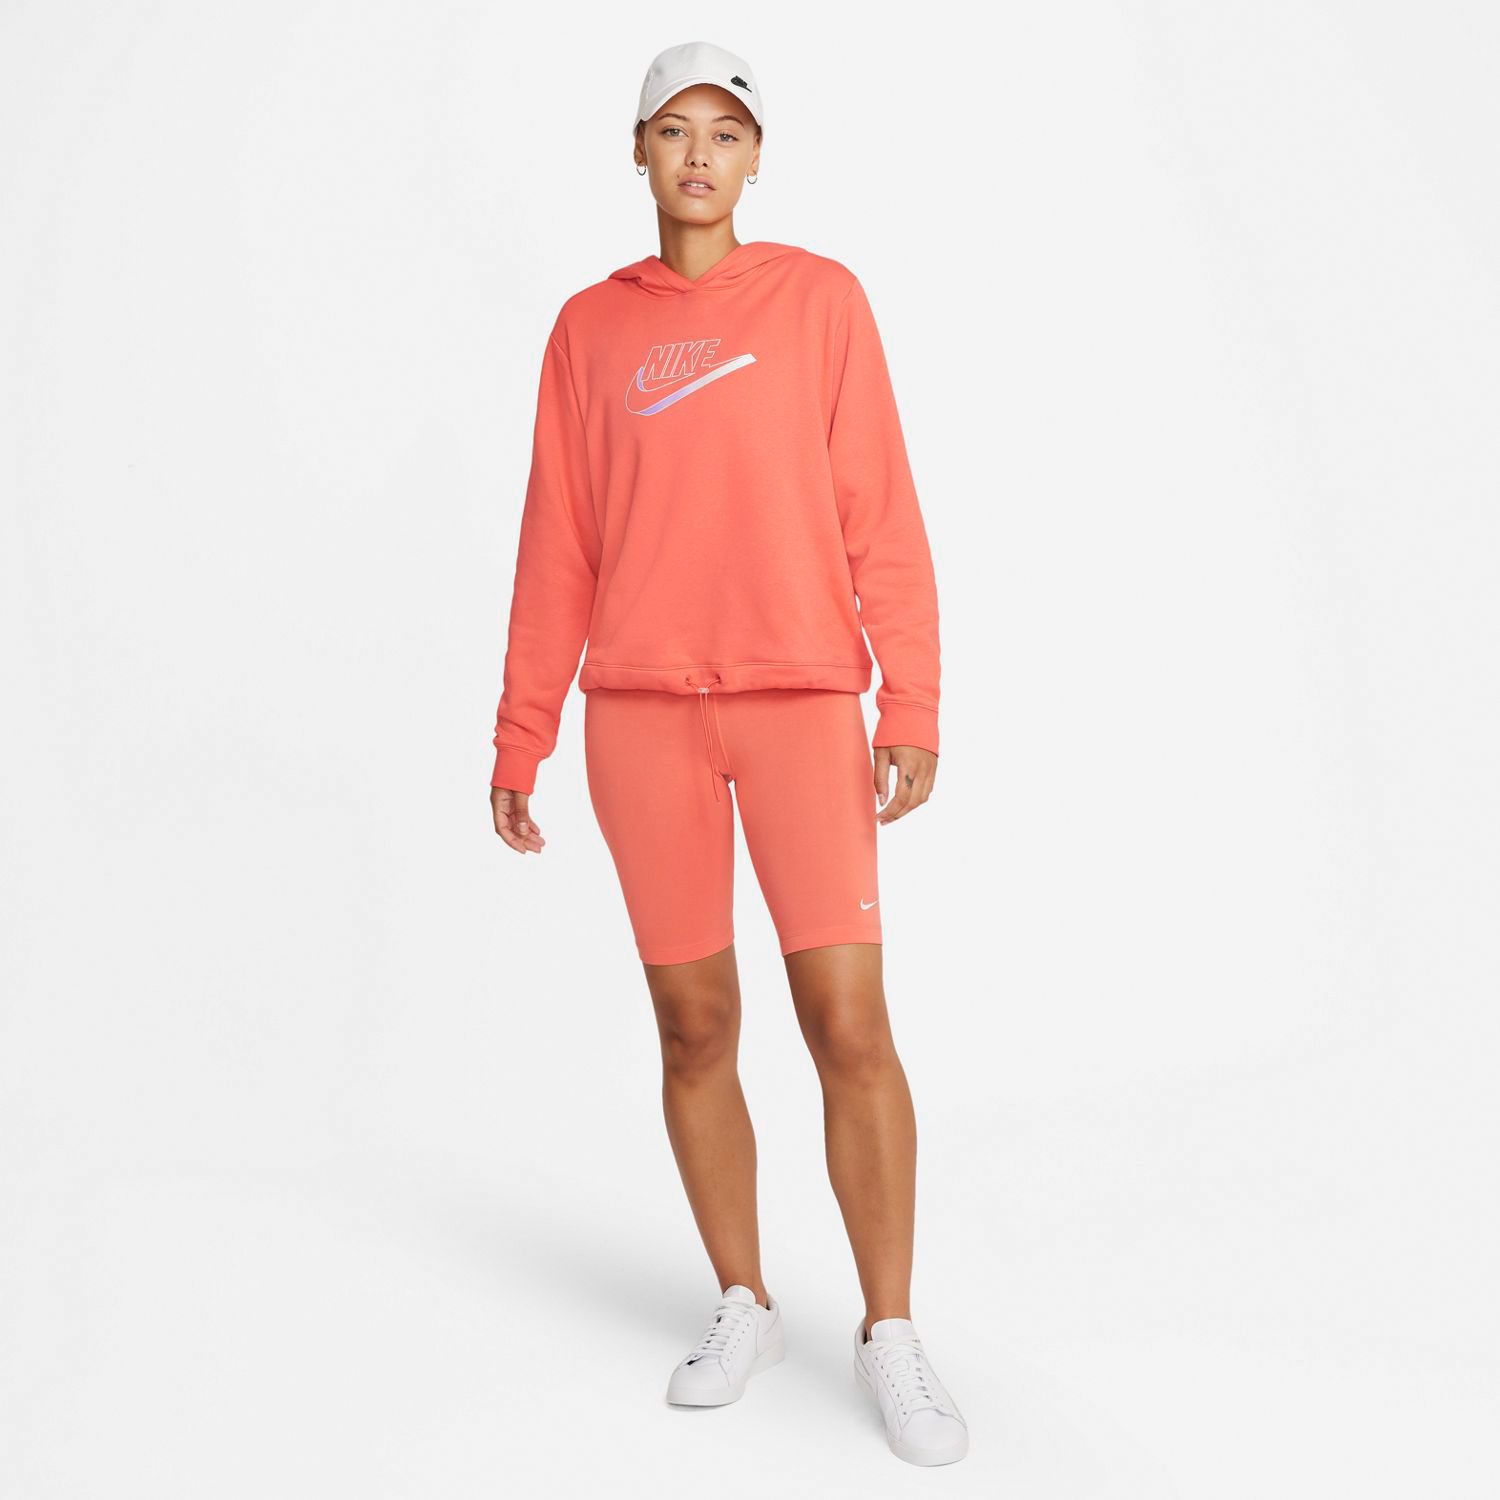 Women's Nike Active Essentials - Kohl's Blog